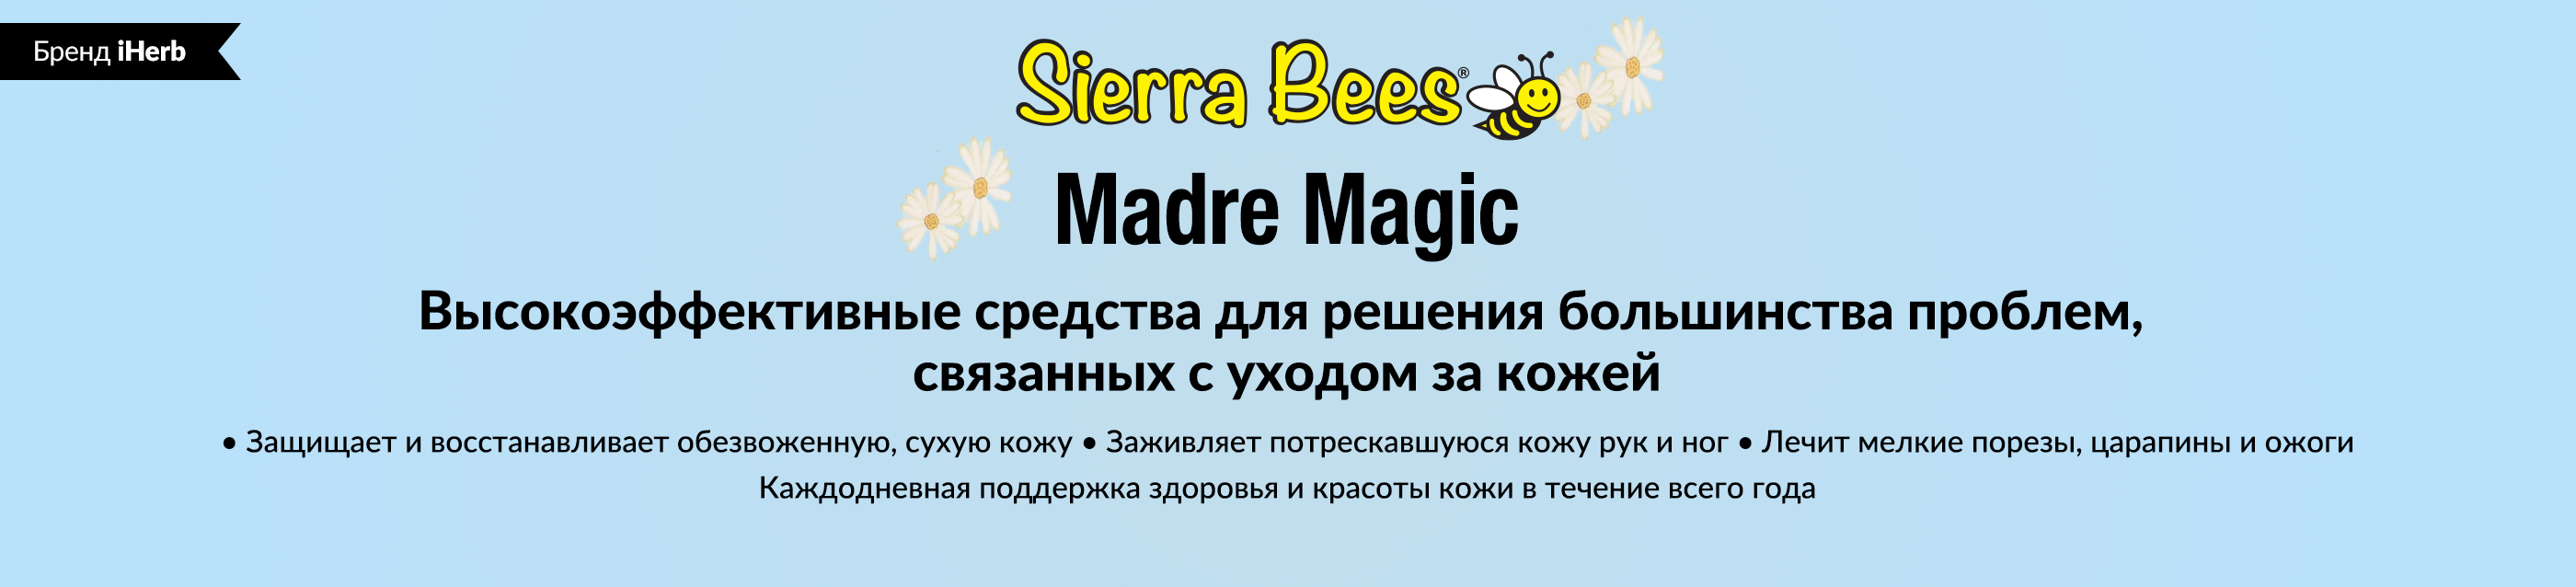 Sierra Bees Madre Magic